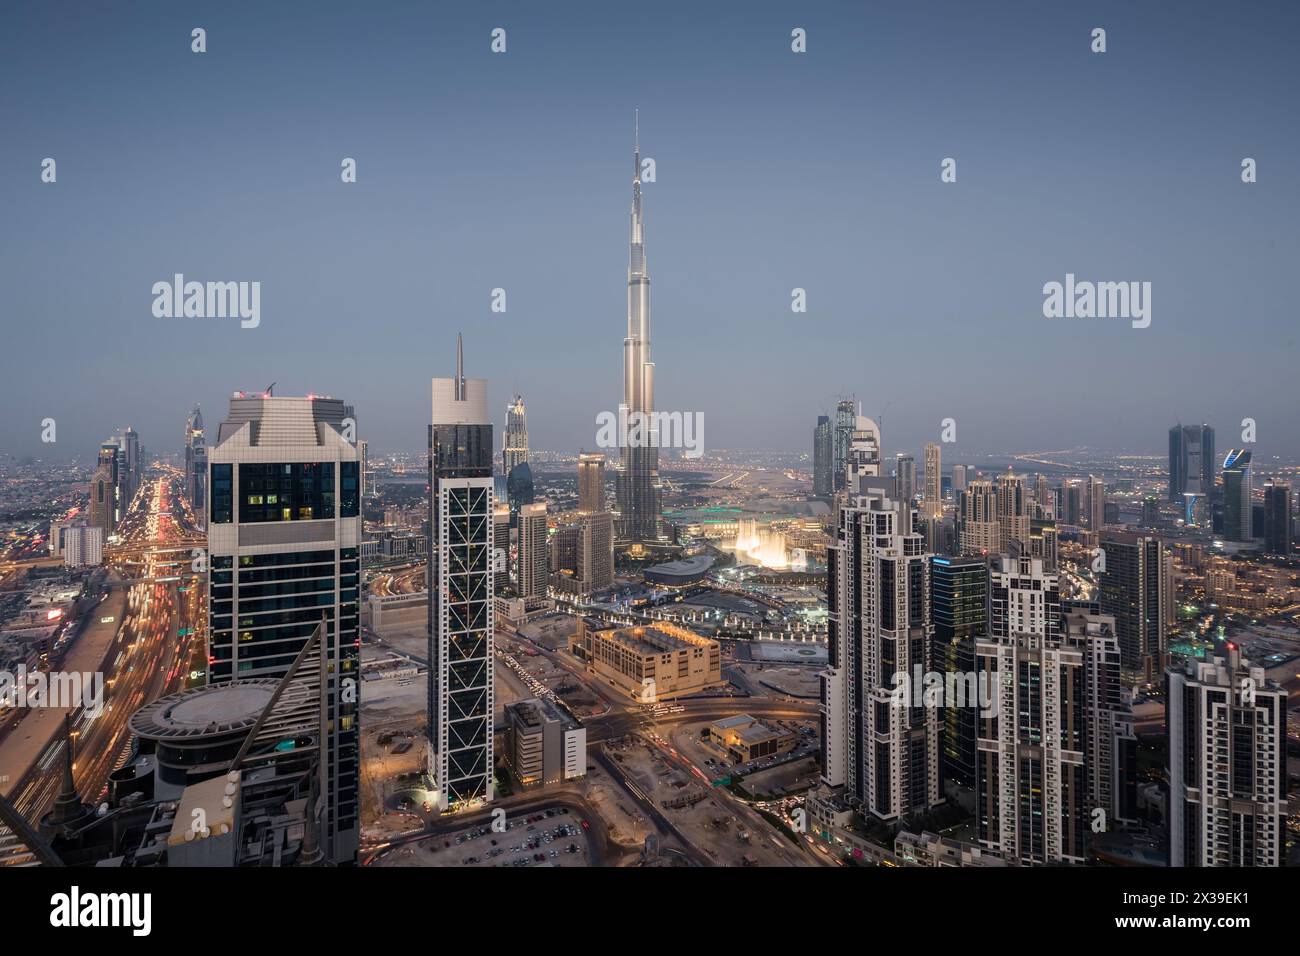 DUBAI, UAE - JAN 9, 2017: Evening Millenium Tower and Burj Khalifa, Executive Towers at night, Burj Khalifa - skyscraper in height of 828 meters in Du Stock Photo